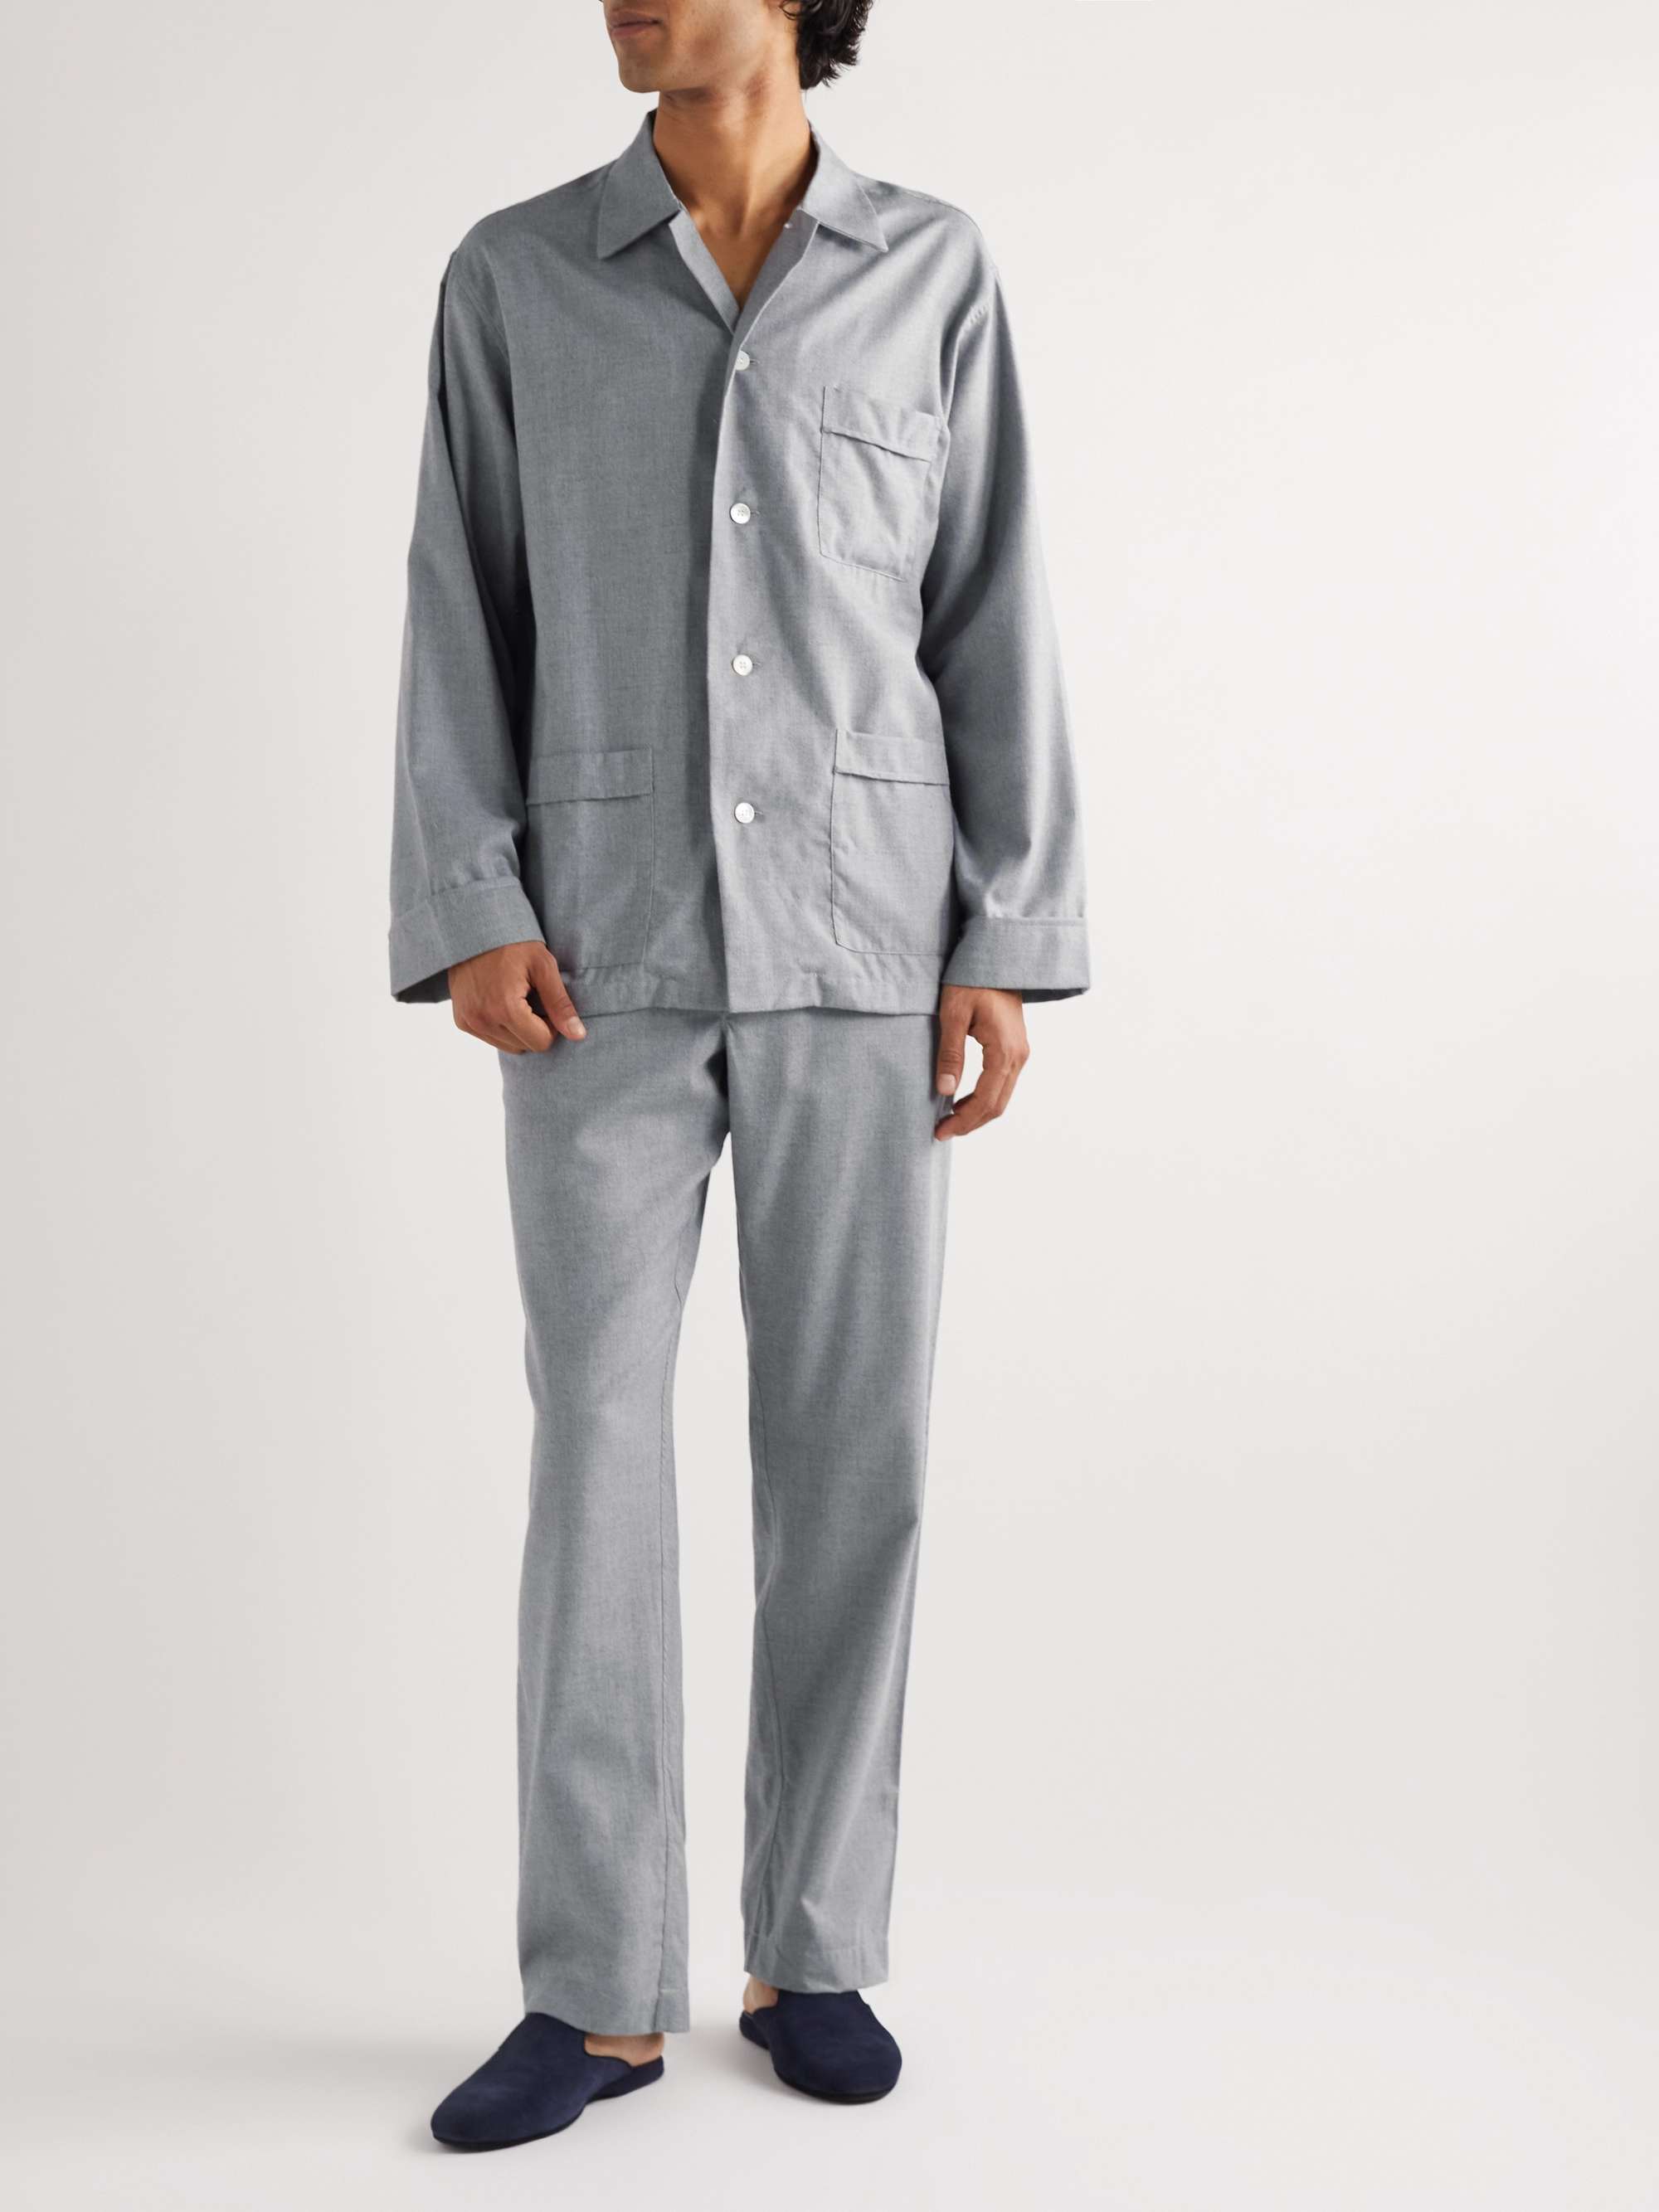 ANDERSON & SHEPPARD Cotton and Cashmere-Blend Pyjama Set for Men | MR ...